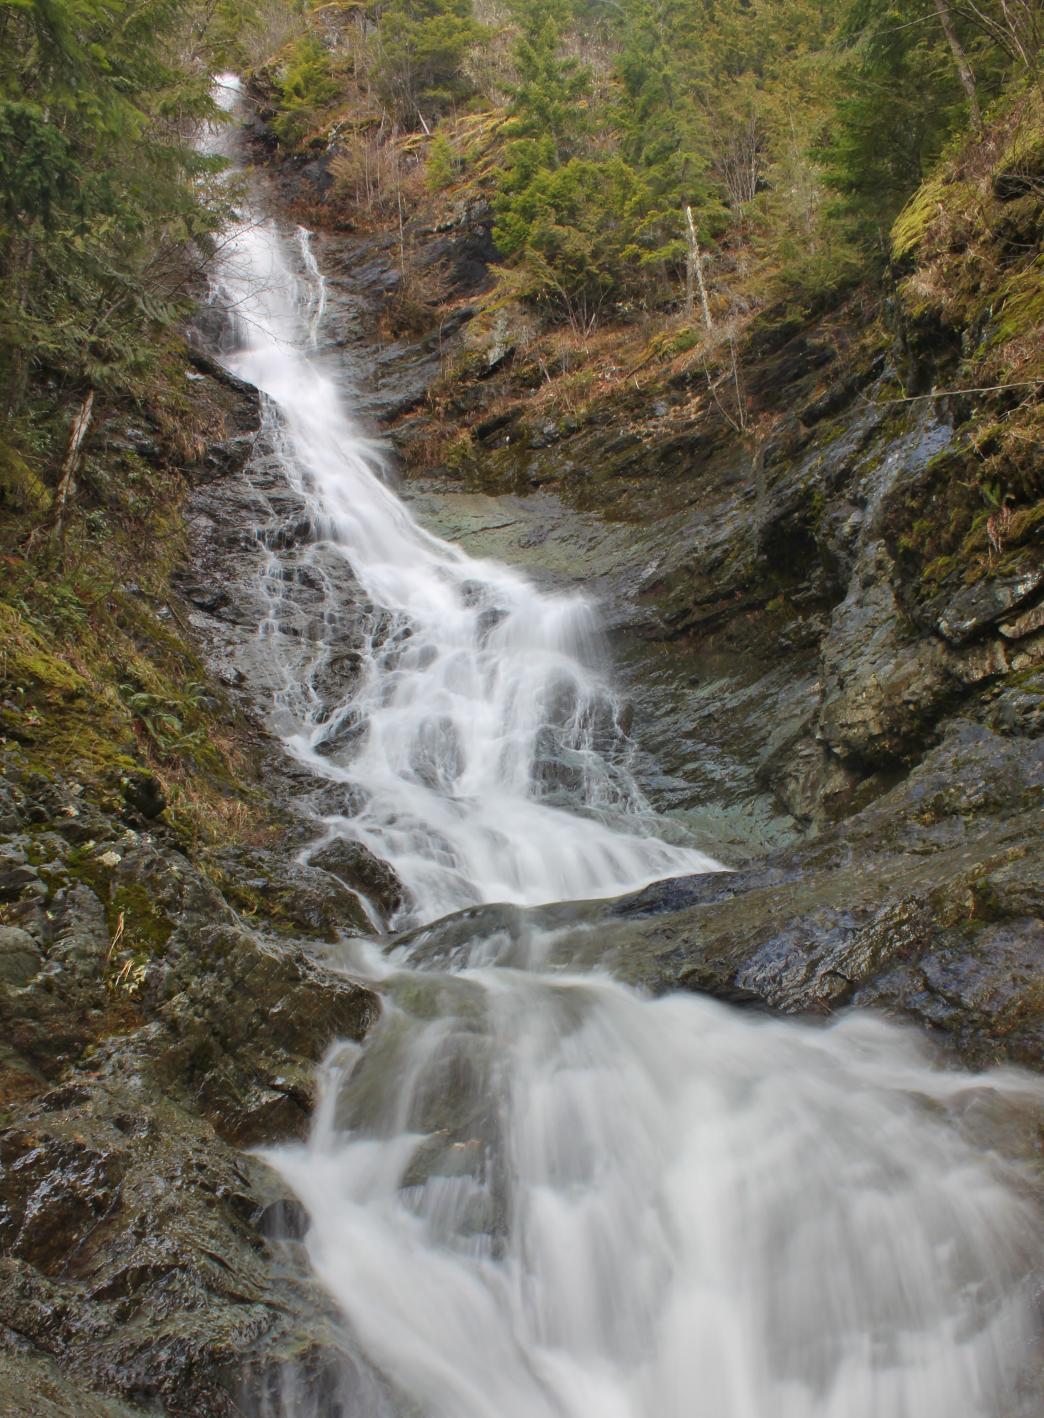 Upper Tier of the Falls